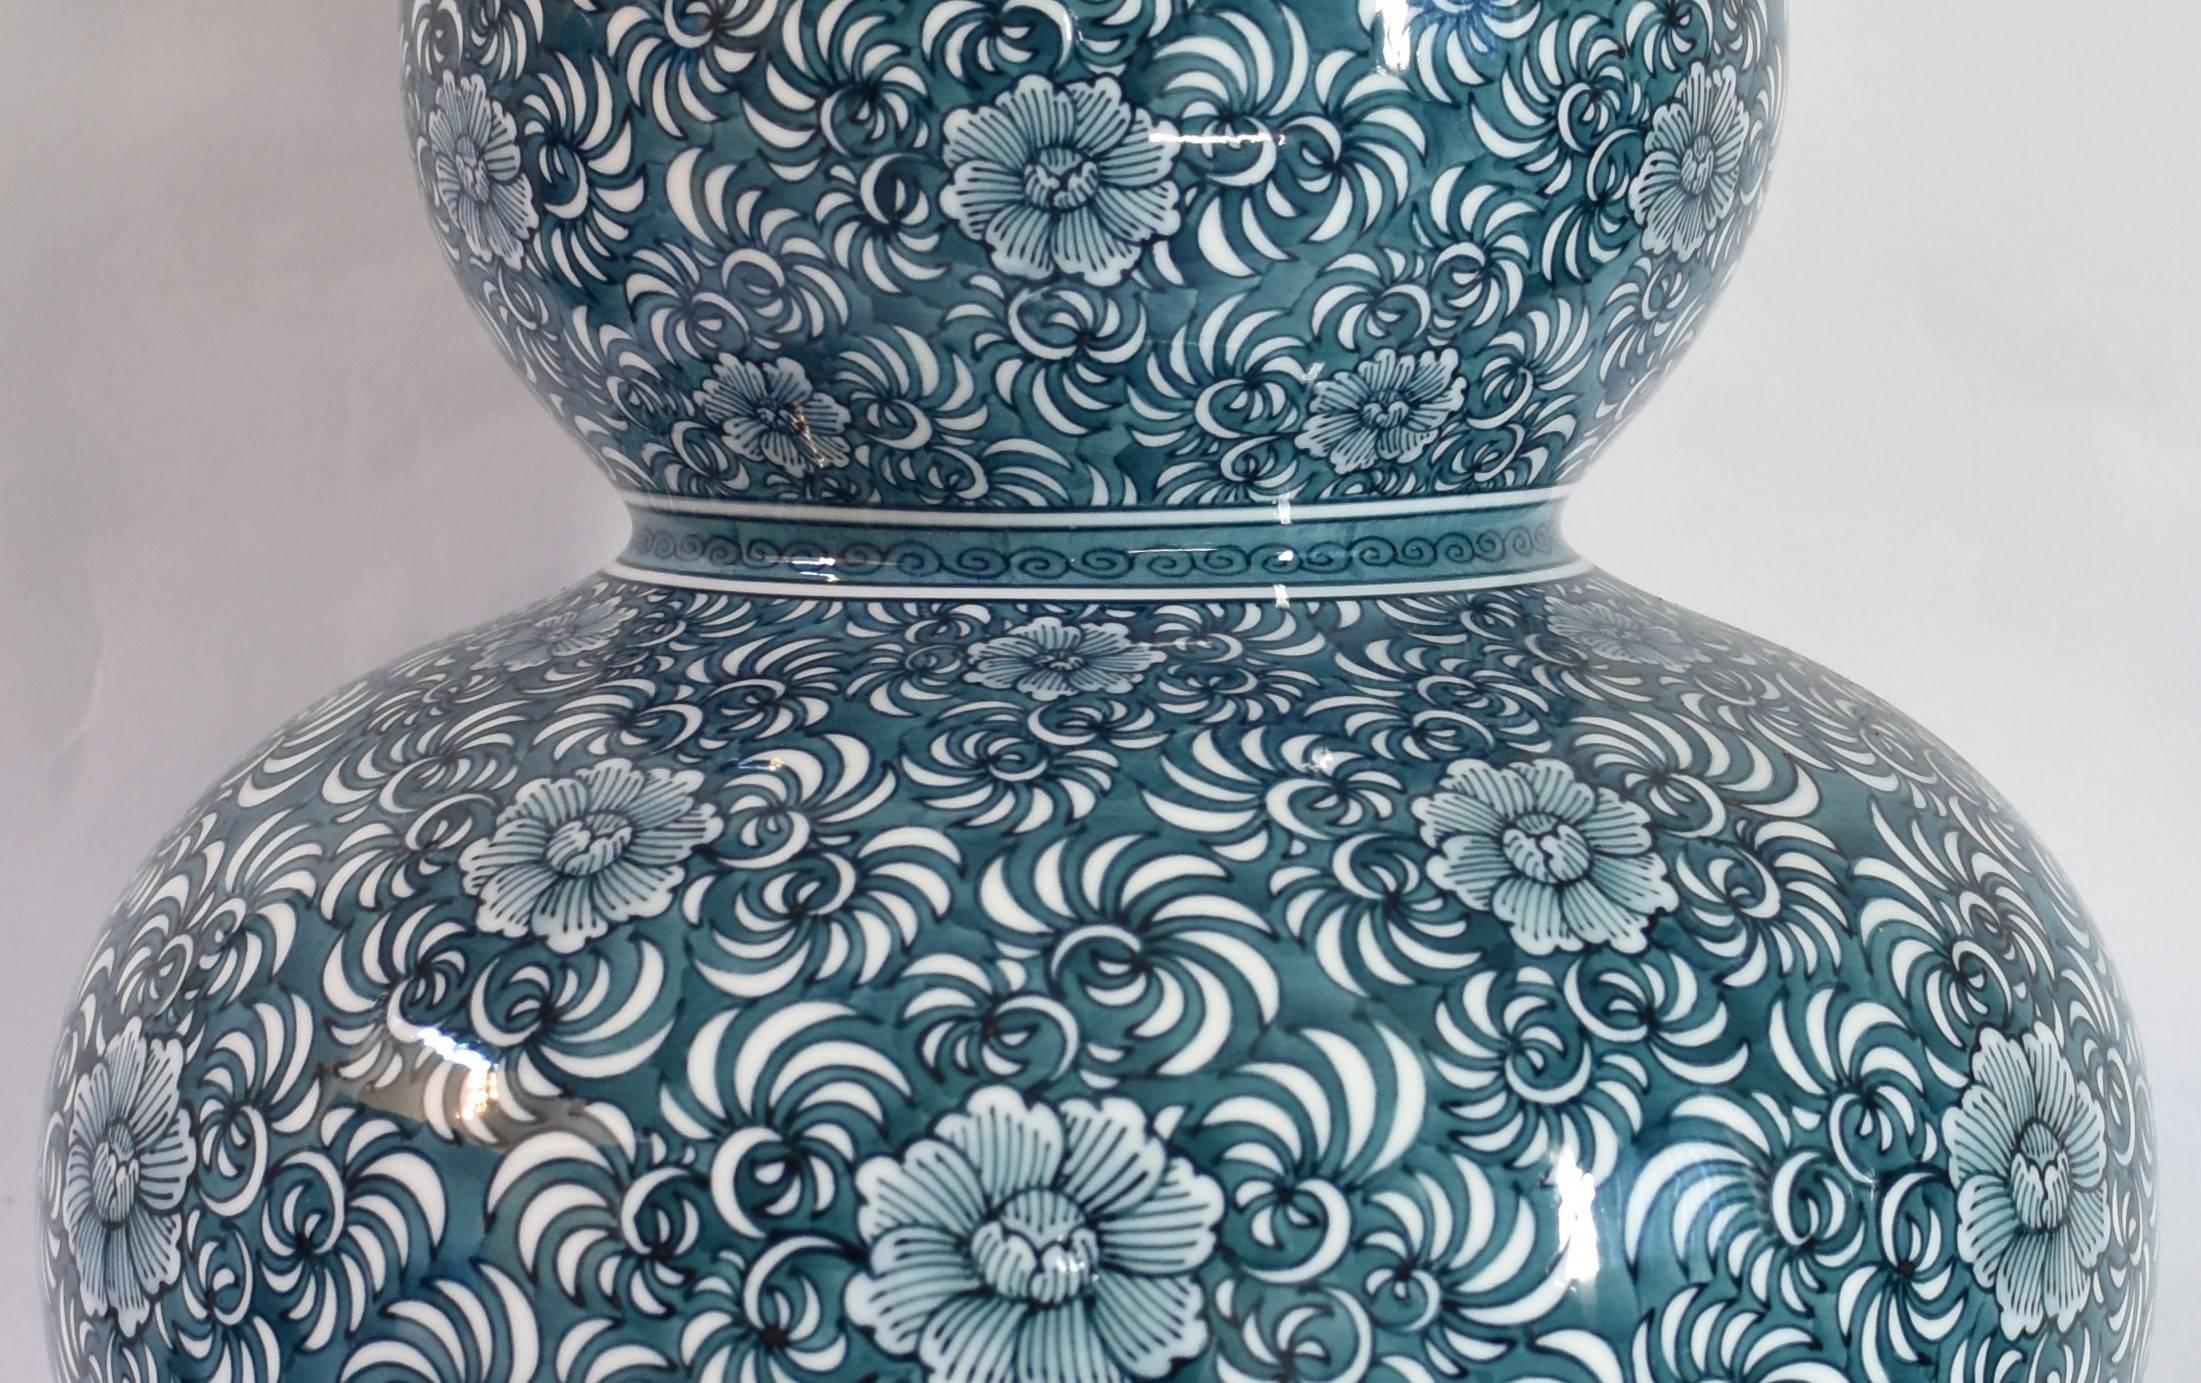 Contemporary Blue Porcelain Vase by Japanese Master Artist